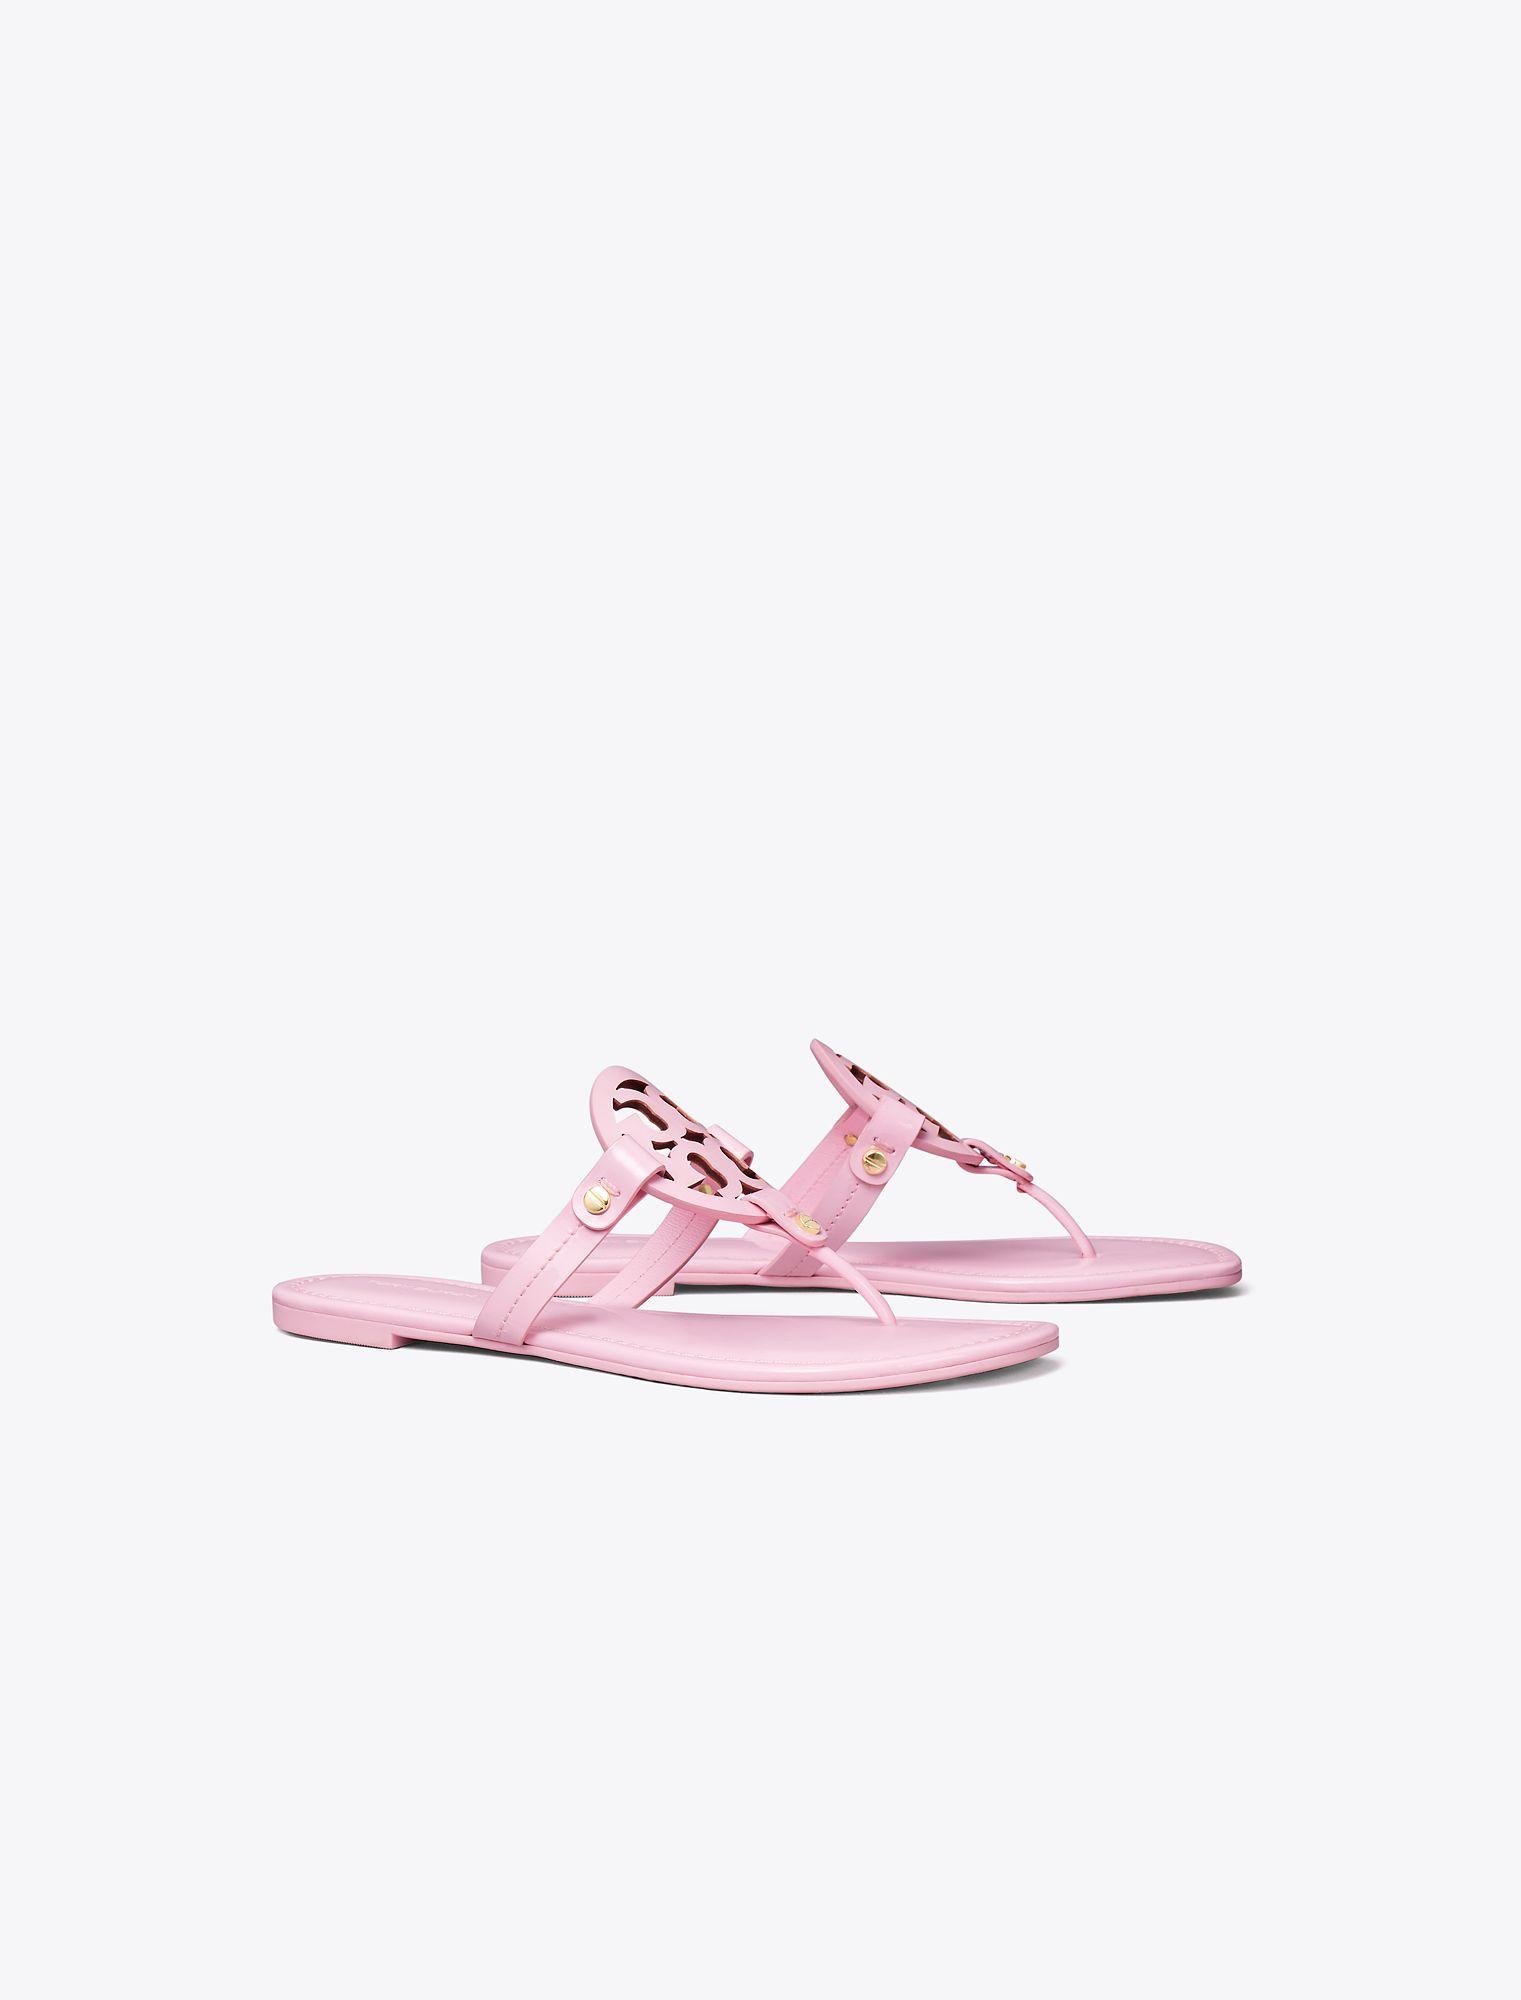 Tory Burch, Shoes, Tory Burch Pink Miller Thong Sandals